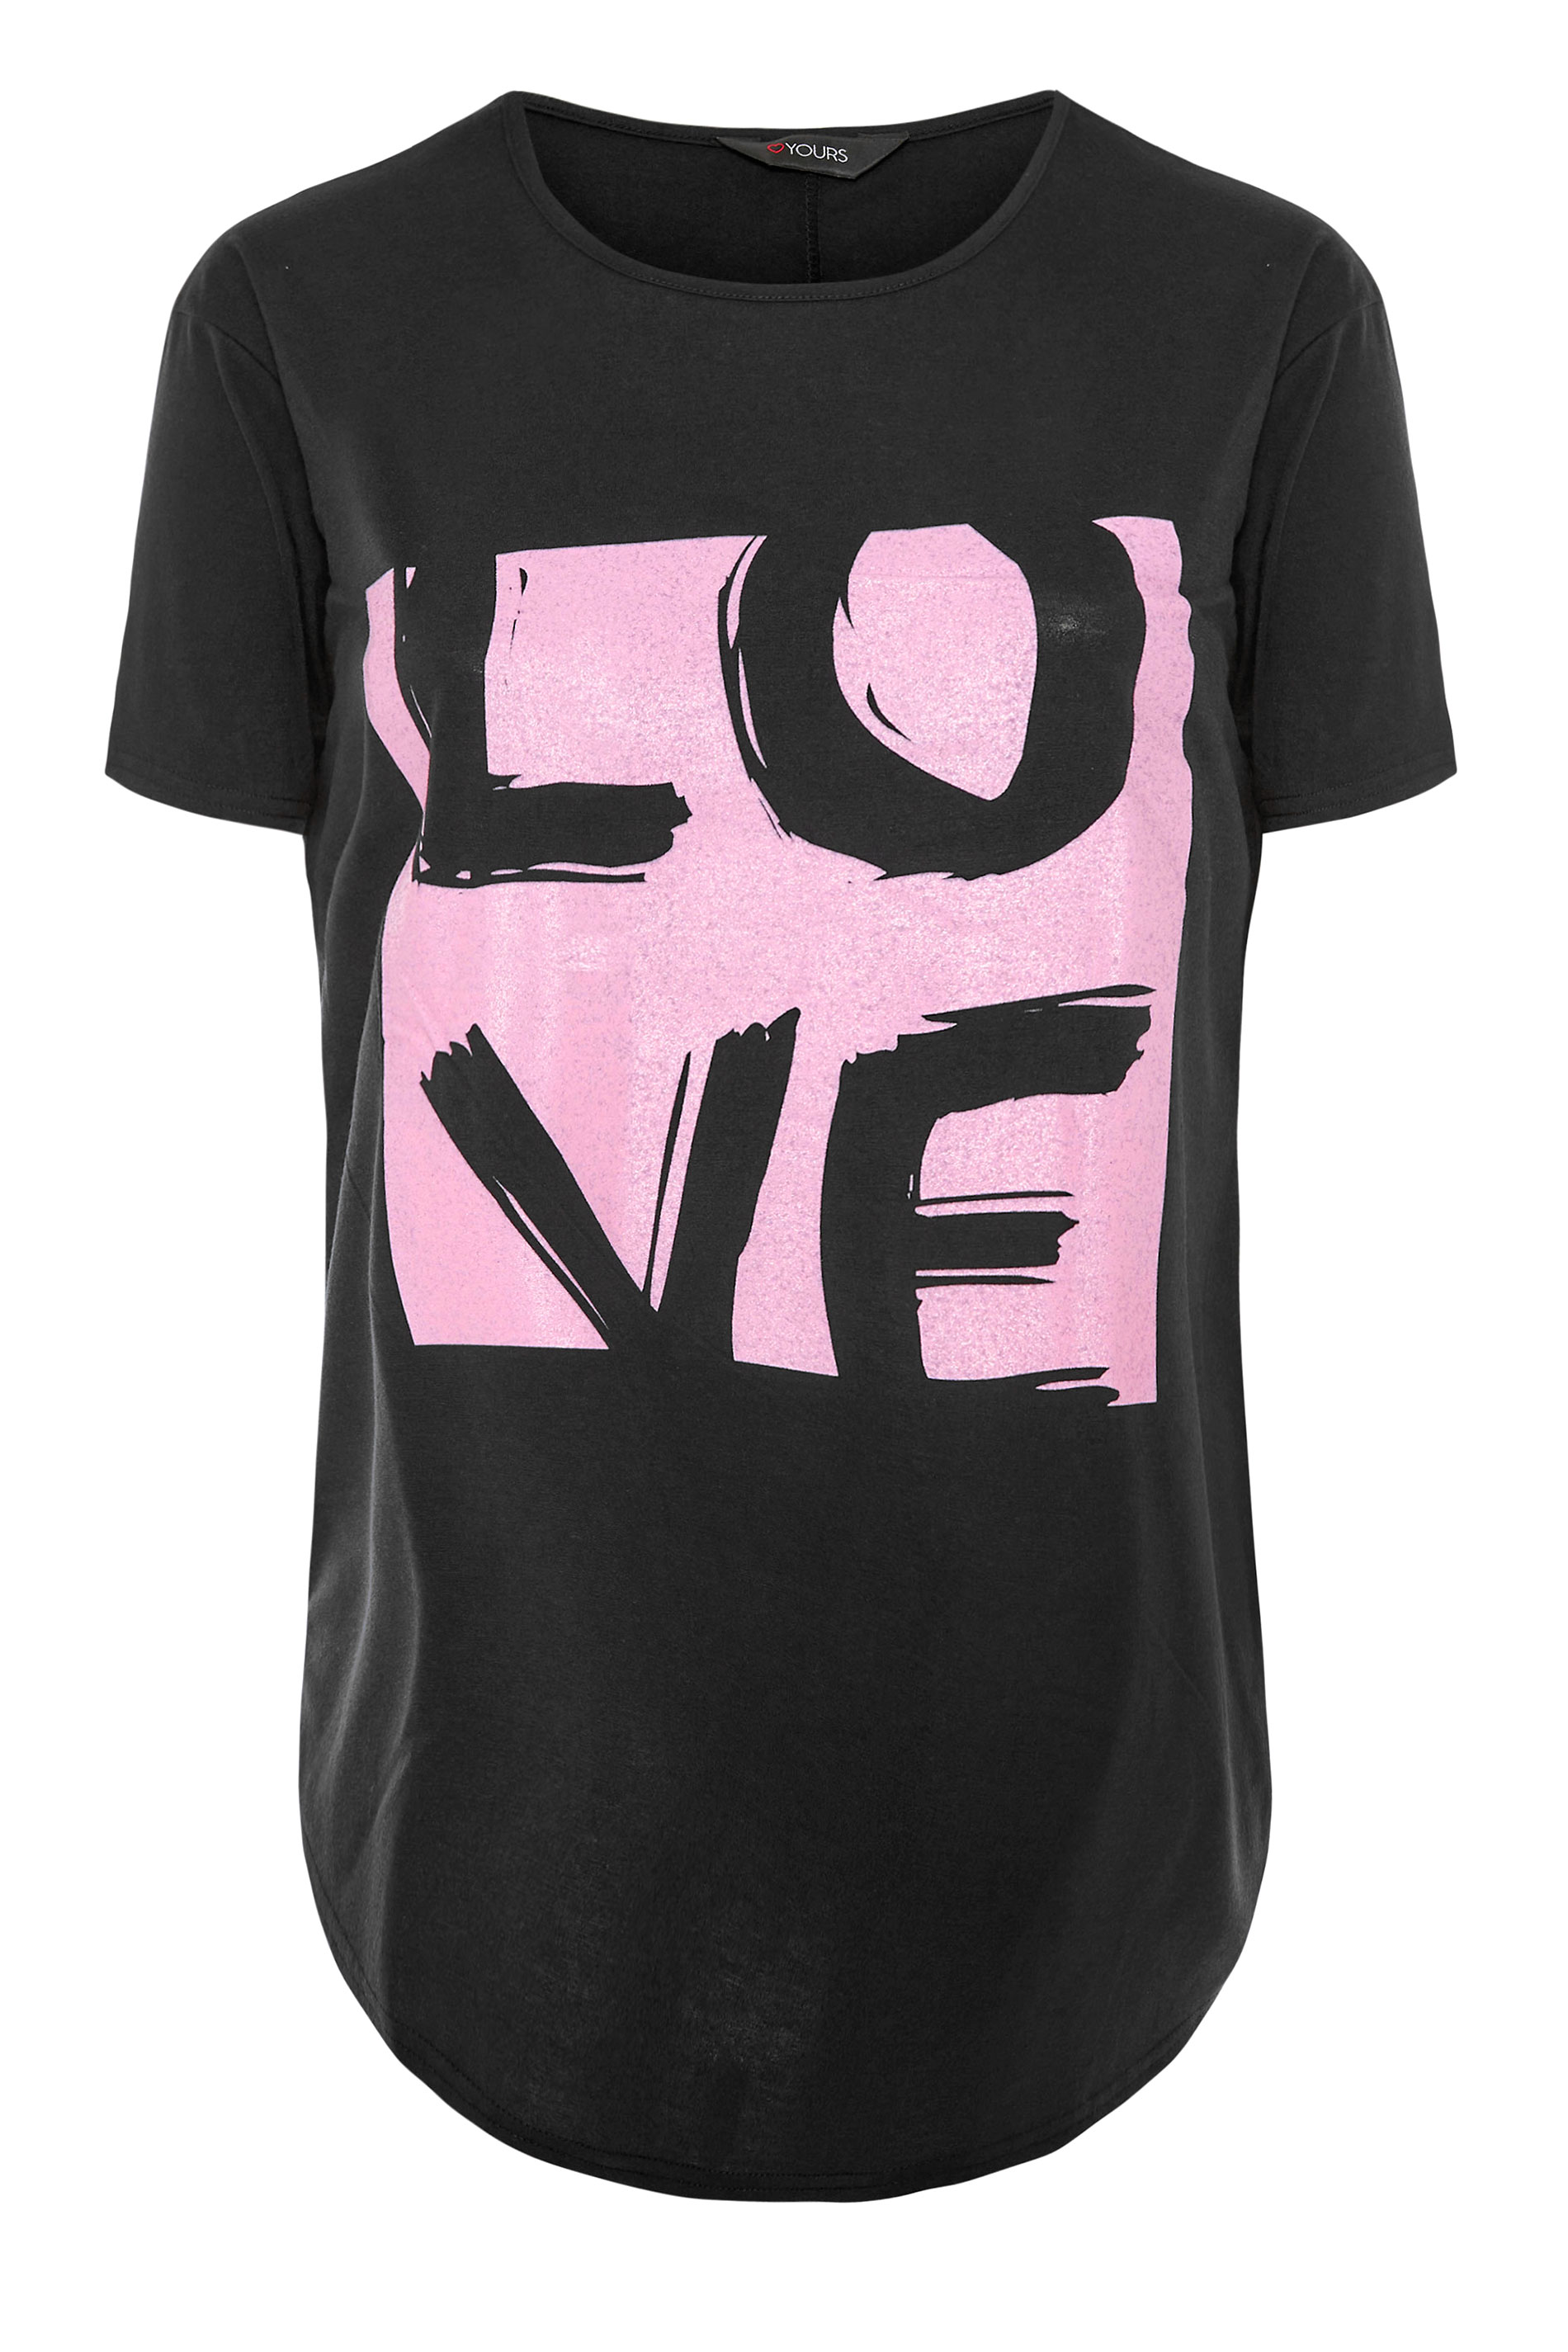 Grande taille  Tops Grande taille  Tops Casual | T-Shirt Noir 'Love' Style Boyfriend - DA93498